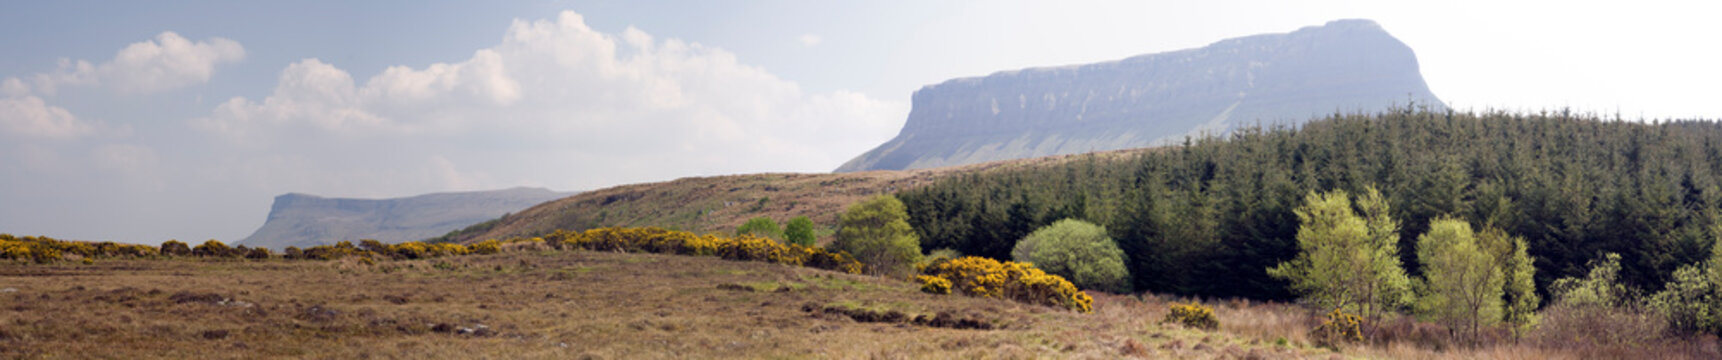 Panorama BenBulben mount - Donegal - Ireland